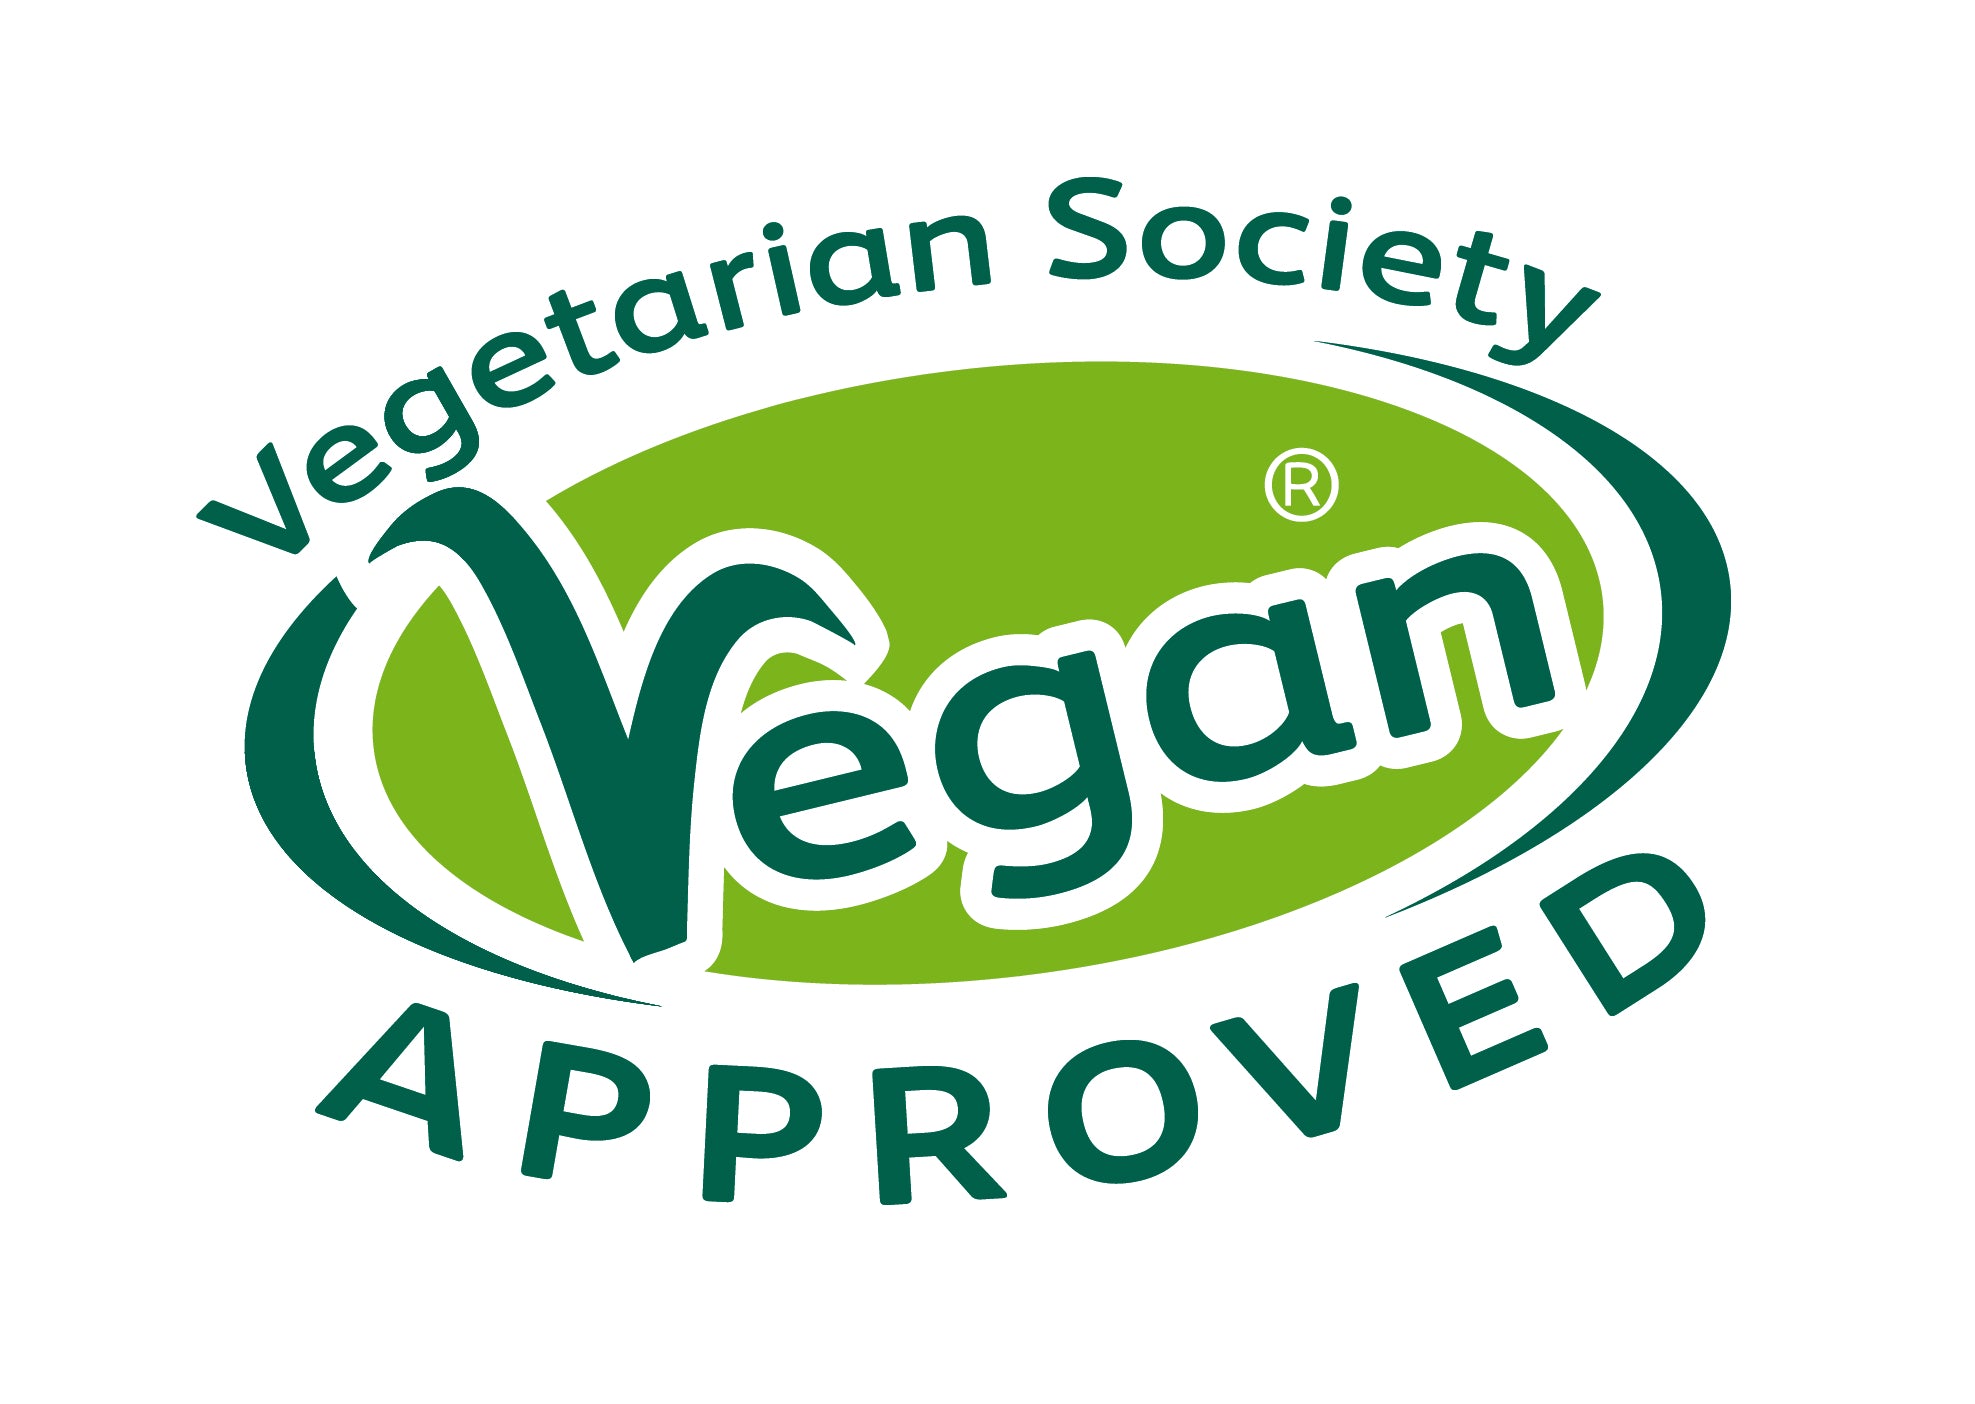 Vegan Approved